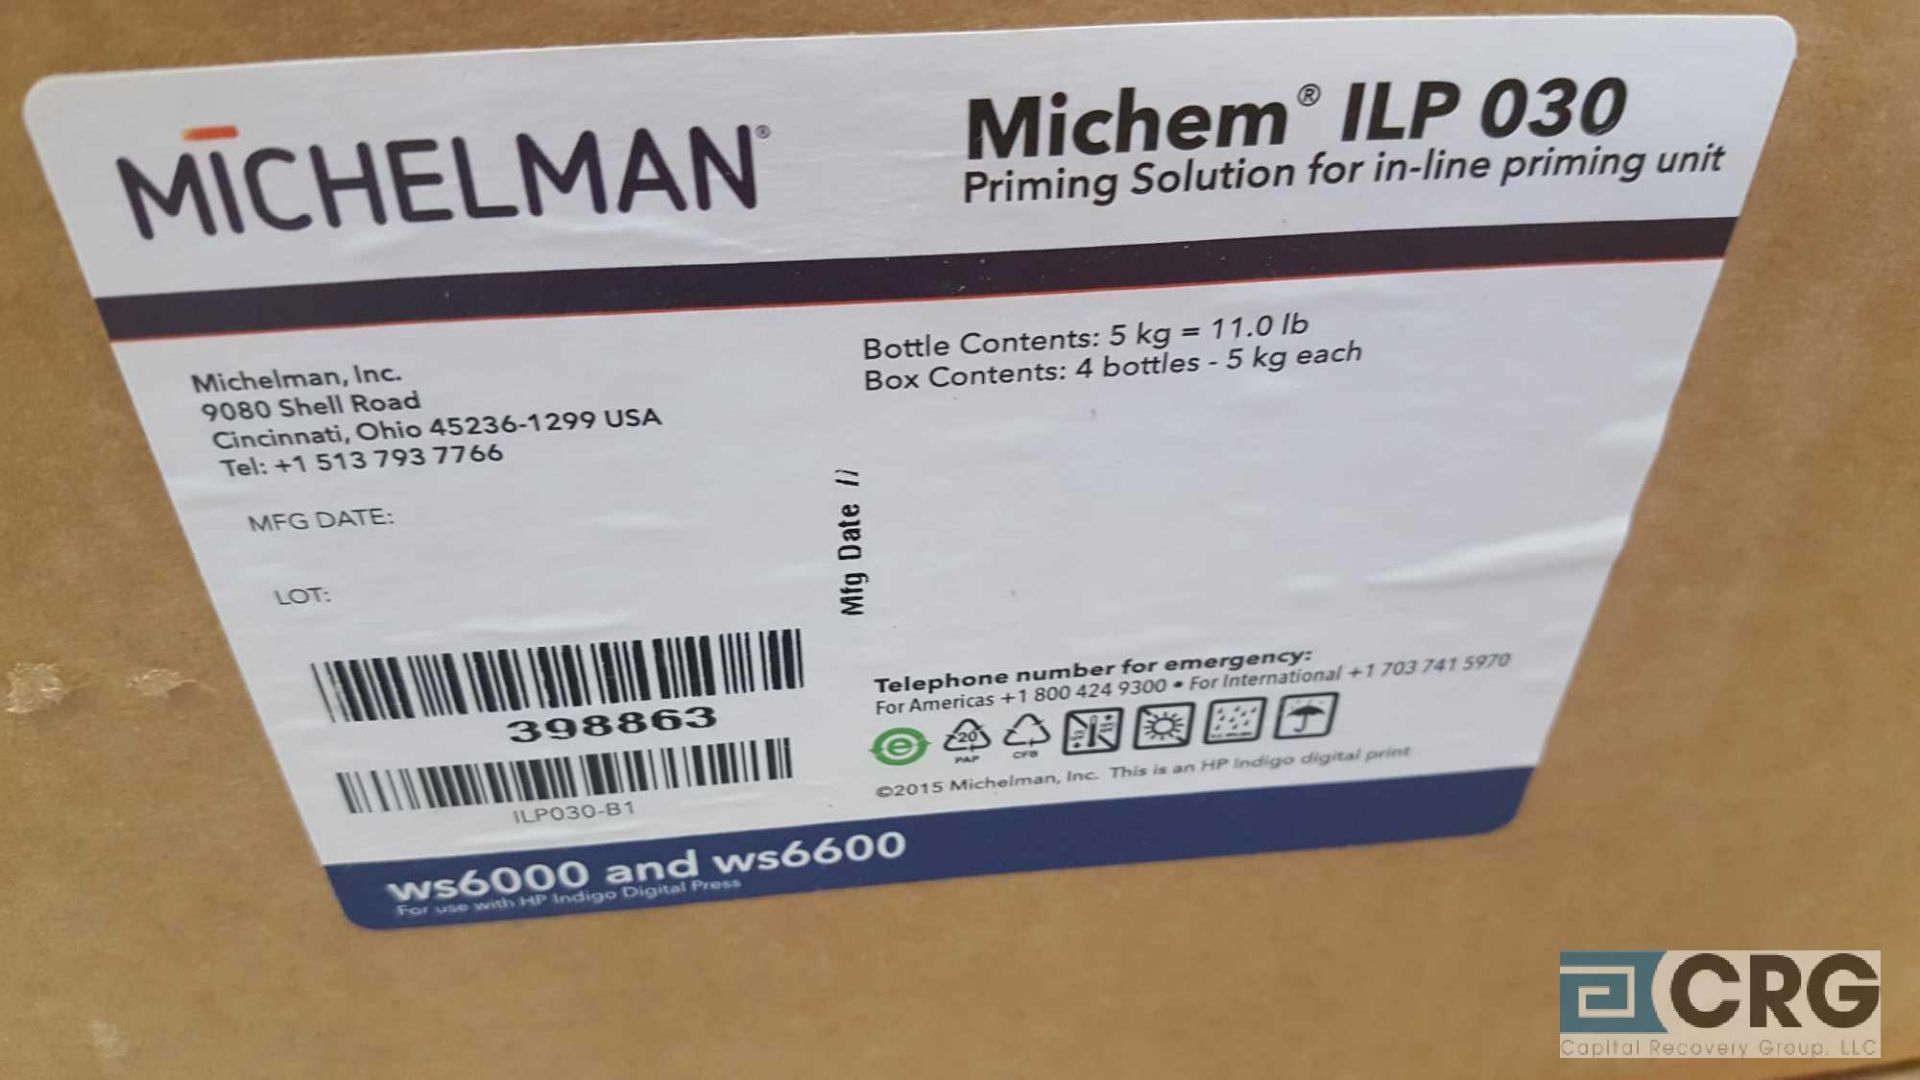 Lot of (16) 11 lb. bottles Michelman, Michem ILP 030, priming solution for in line priming unit. - Image 2 of 3